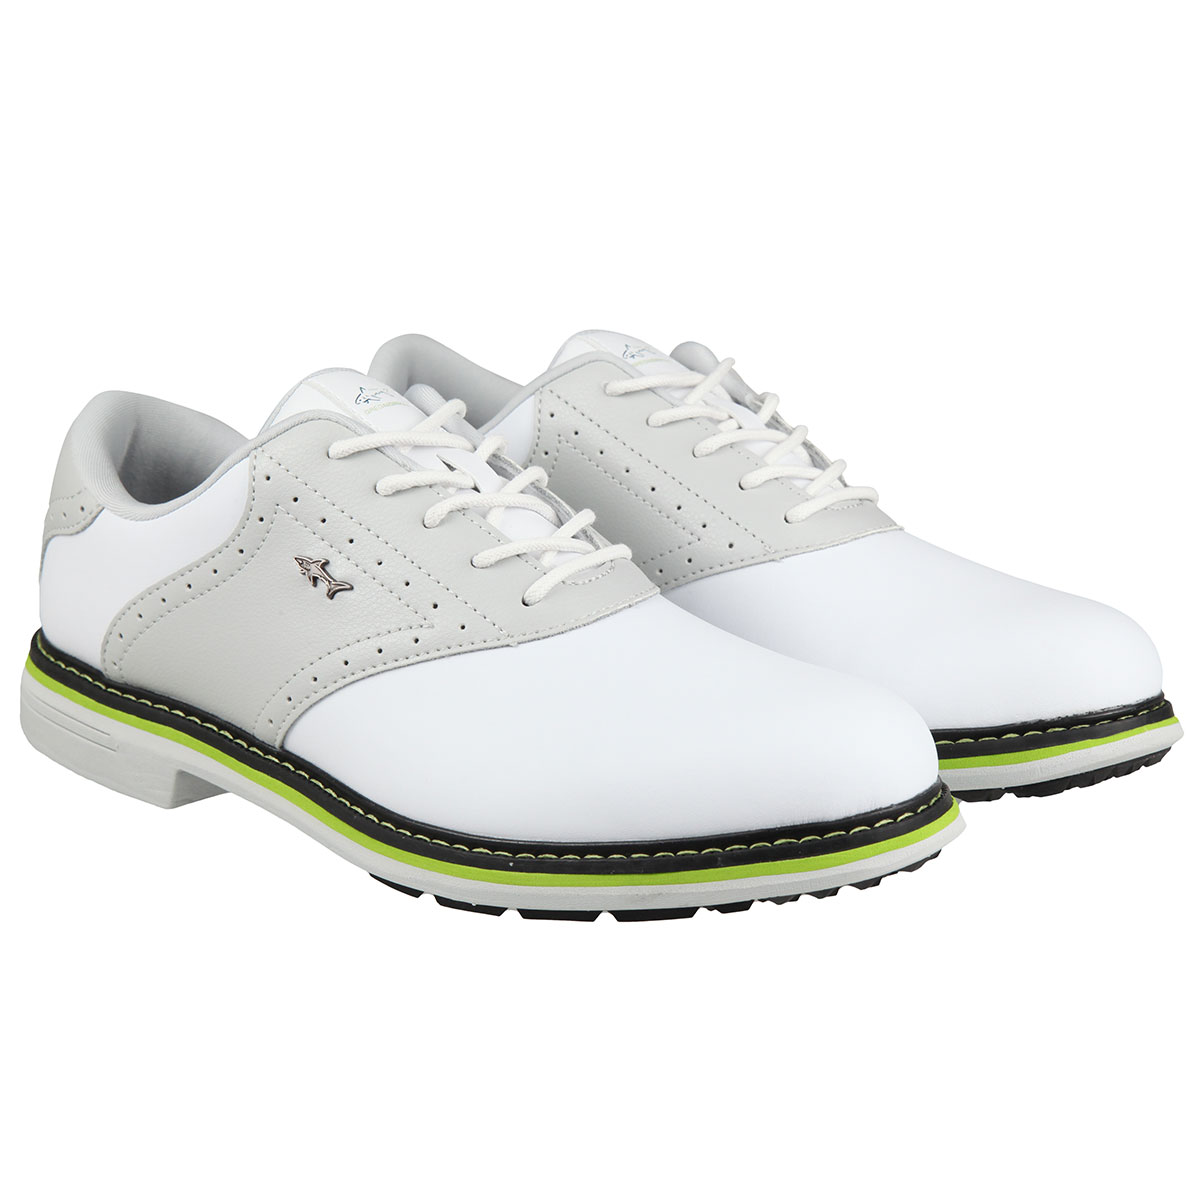 Greg Norman Men's Isa Tour 2 Waterproof Spikeless Golf Shoes from ...